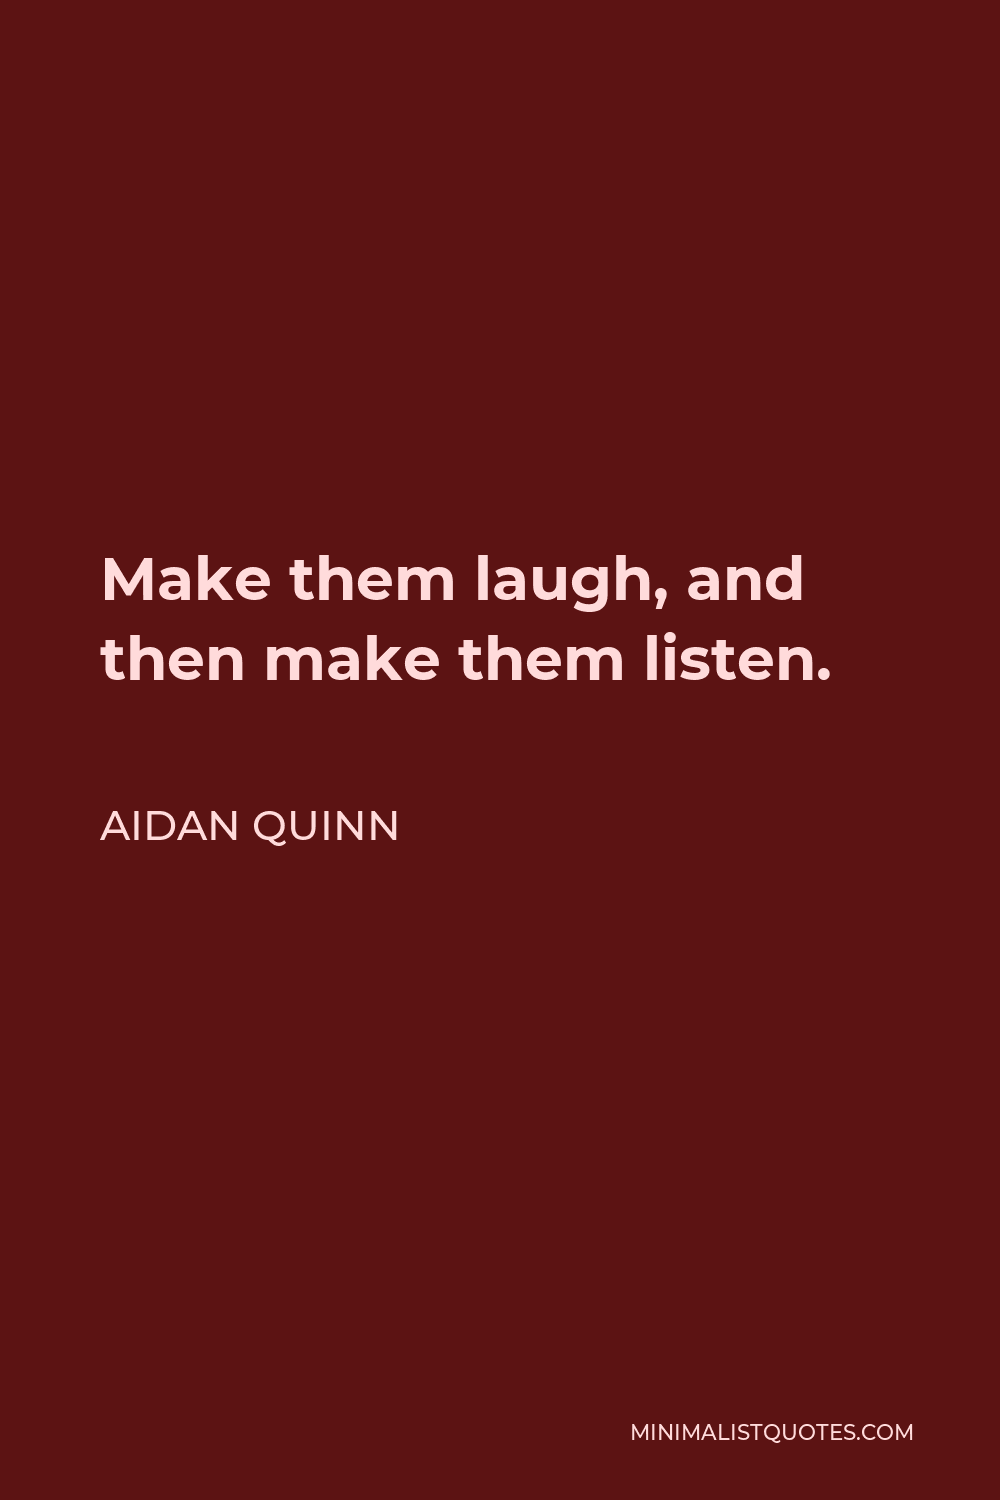 Aidan Quinn Quote - Make them laugh, and then make them listen.